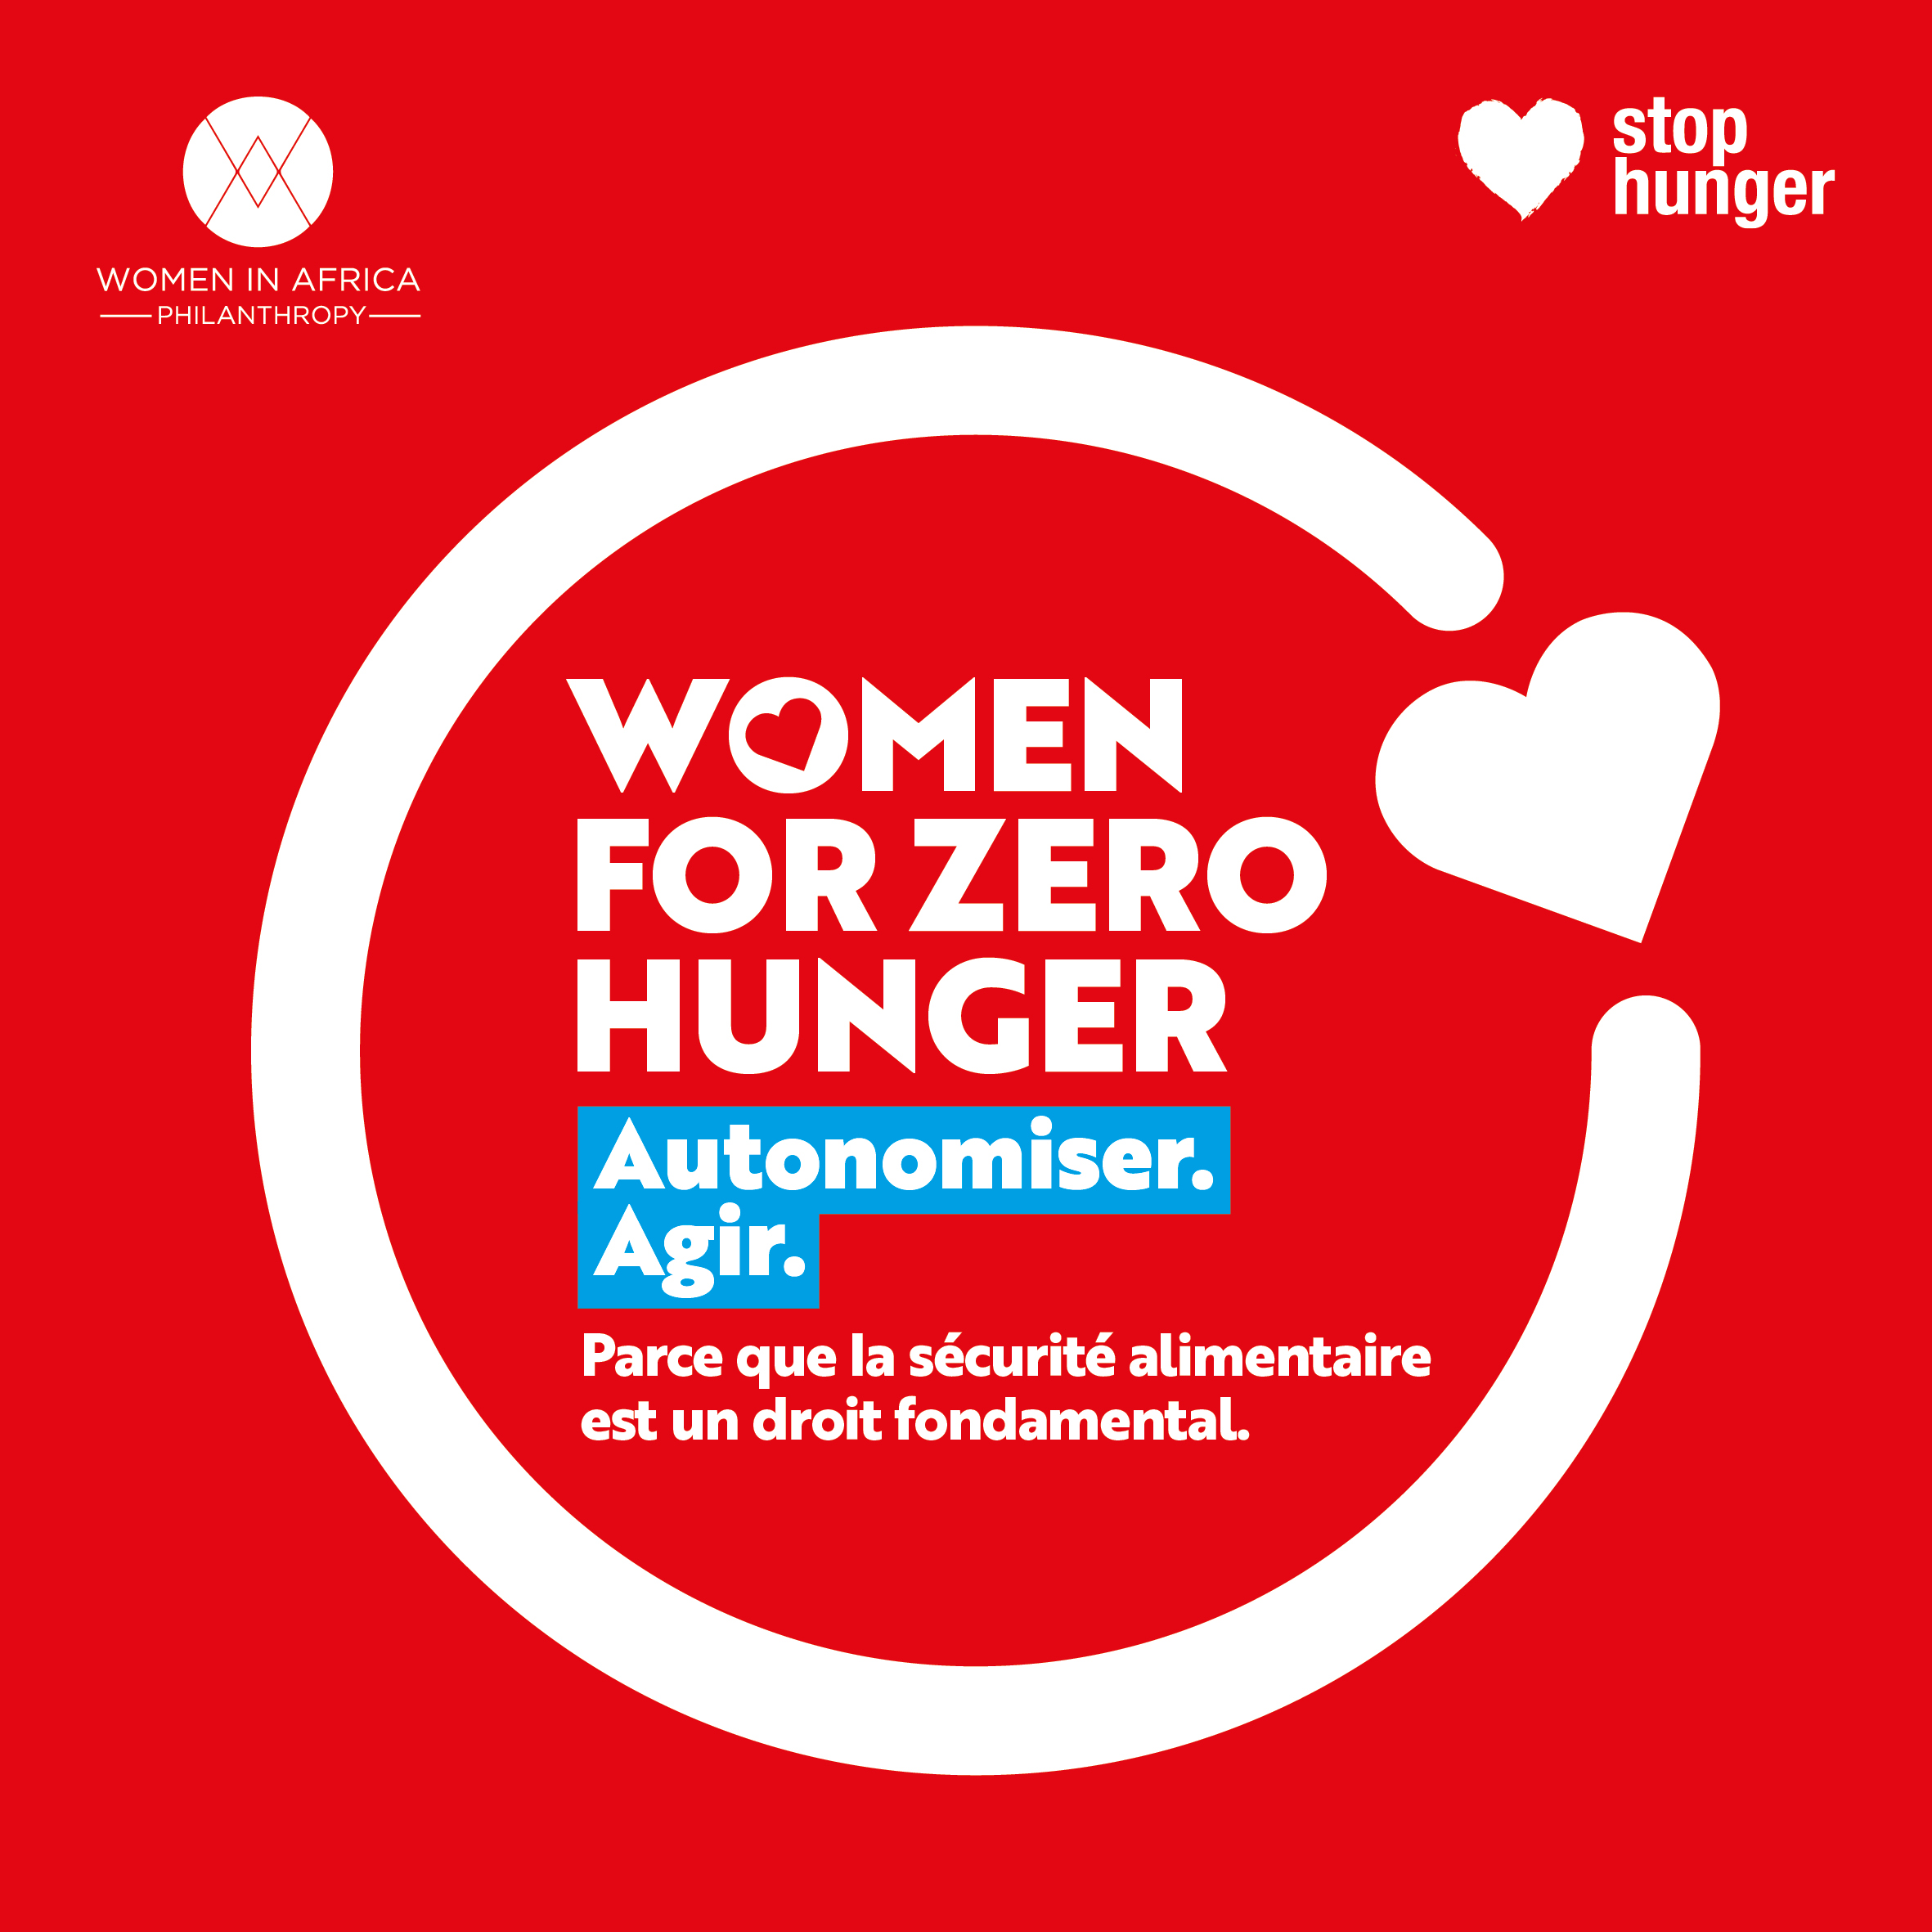 Stop Hunger et Women In Africa lancent le programme “Women for Zero Hunger”